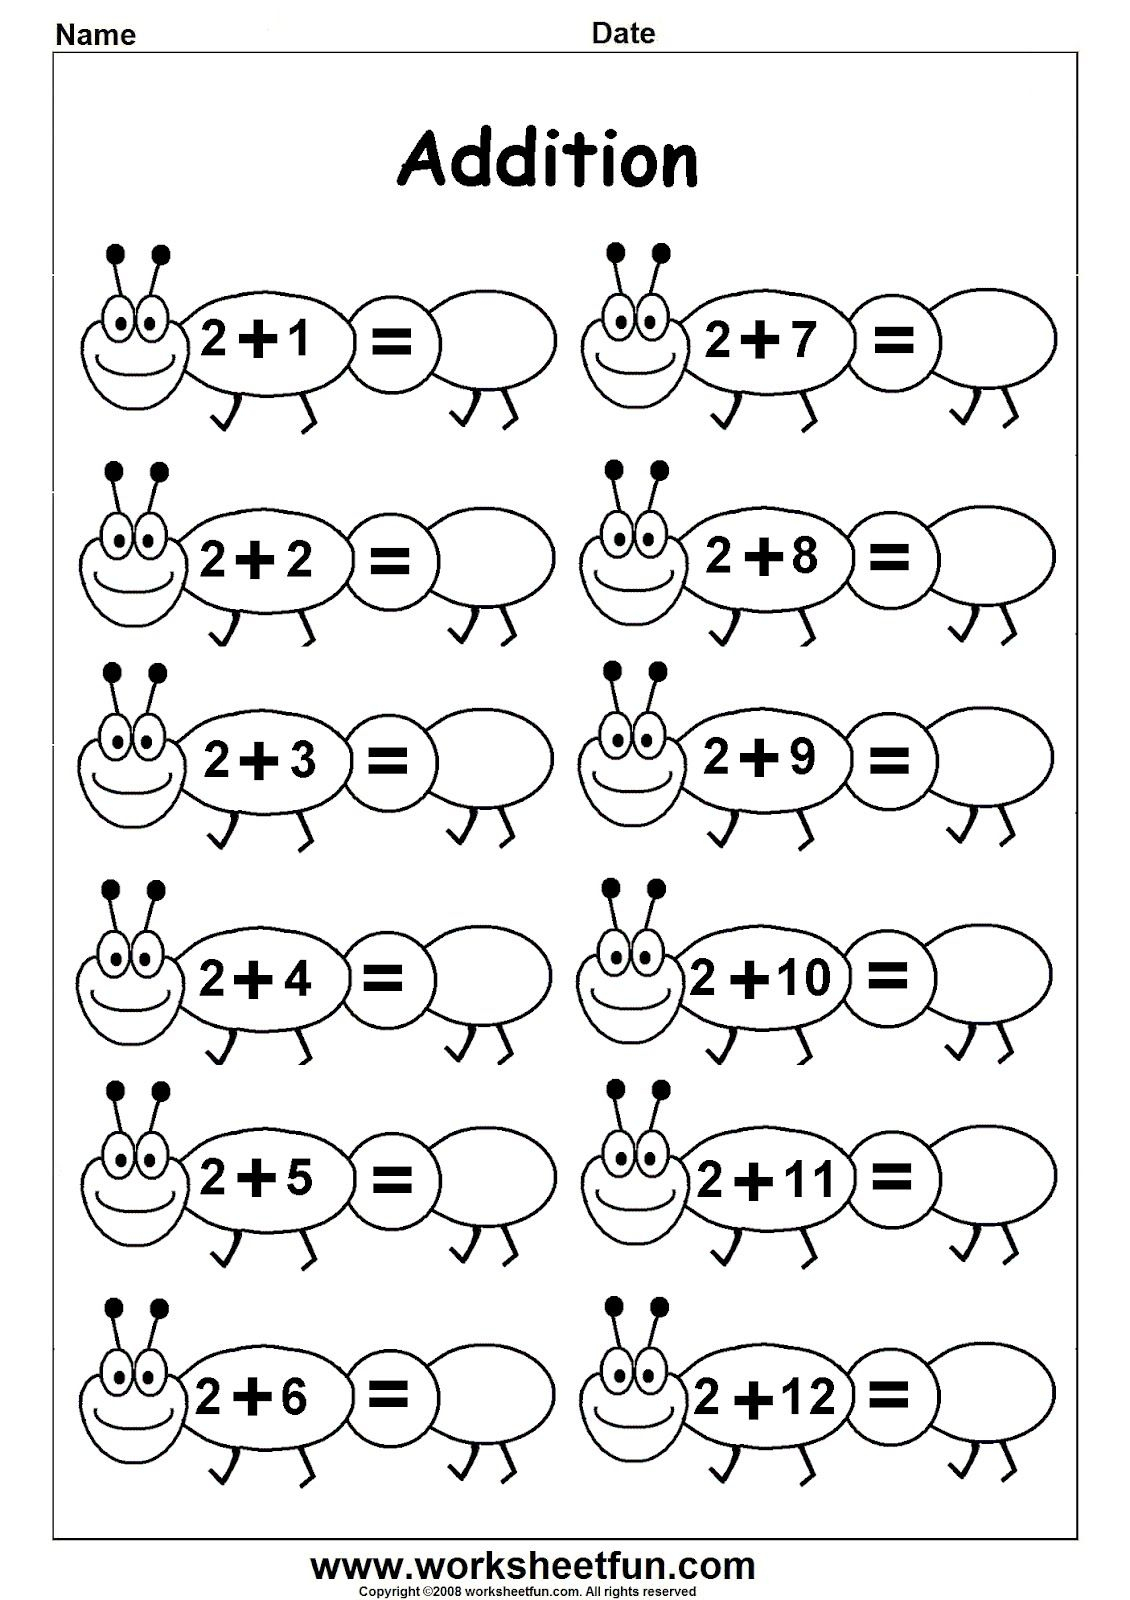 Worksheetfun - Free Printable Worksheets | Ethan School | Free Printable Math Addition Worksheets For Kindergarten